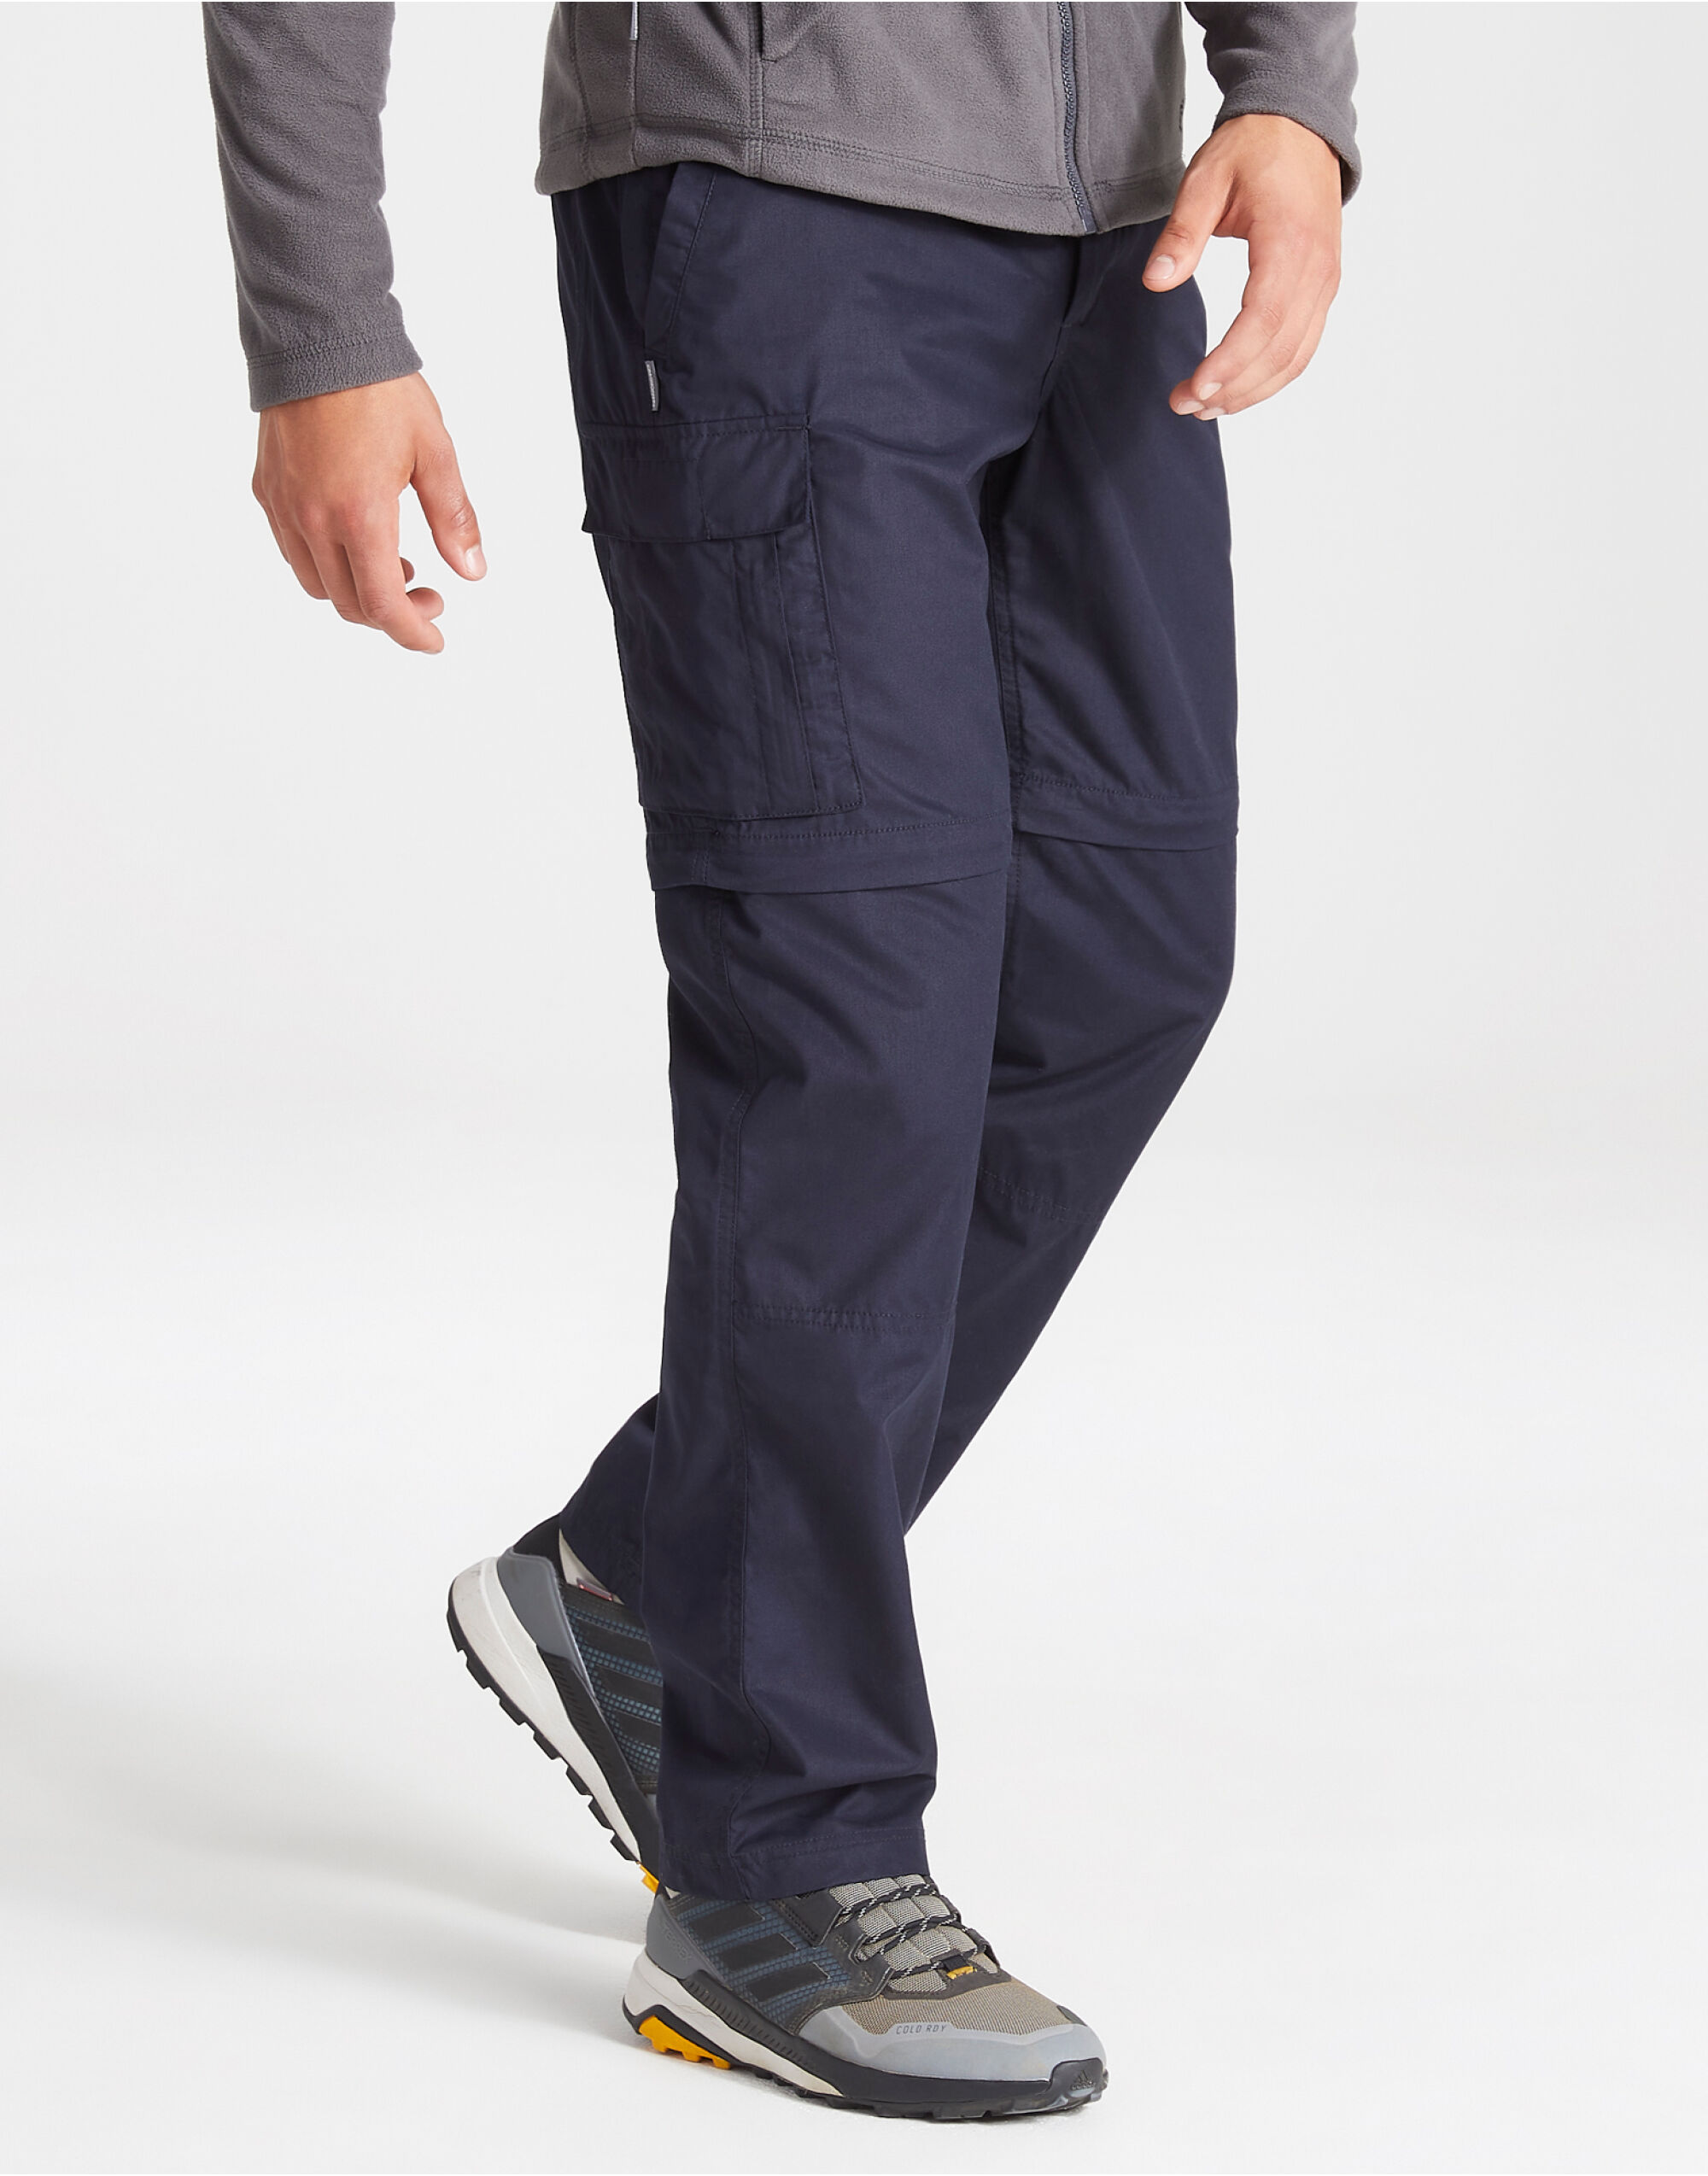 Men's Expert Kiwi Tailored Convertible Trousers (Long)